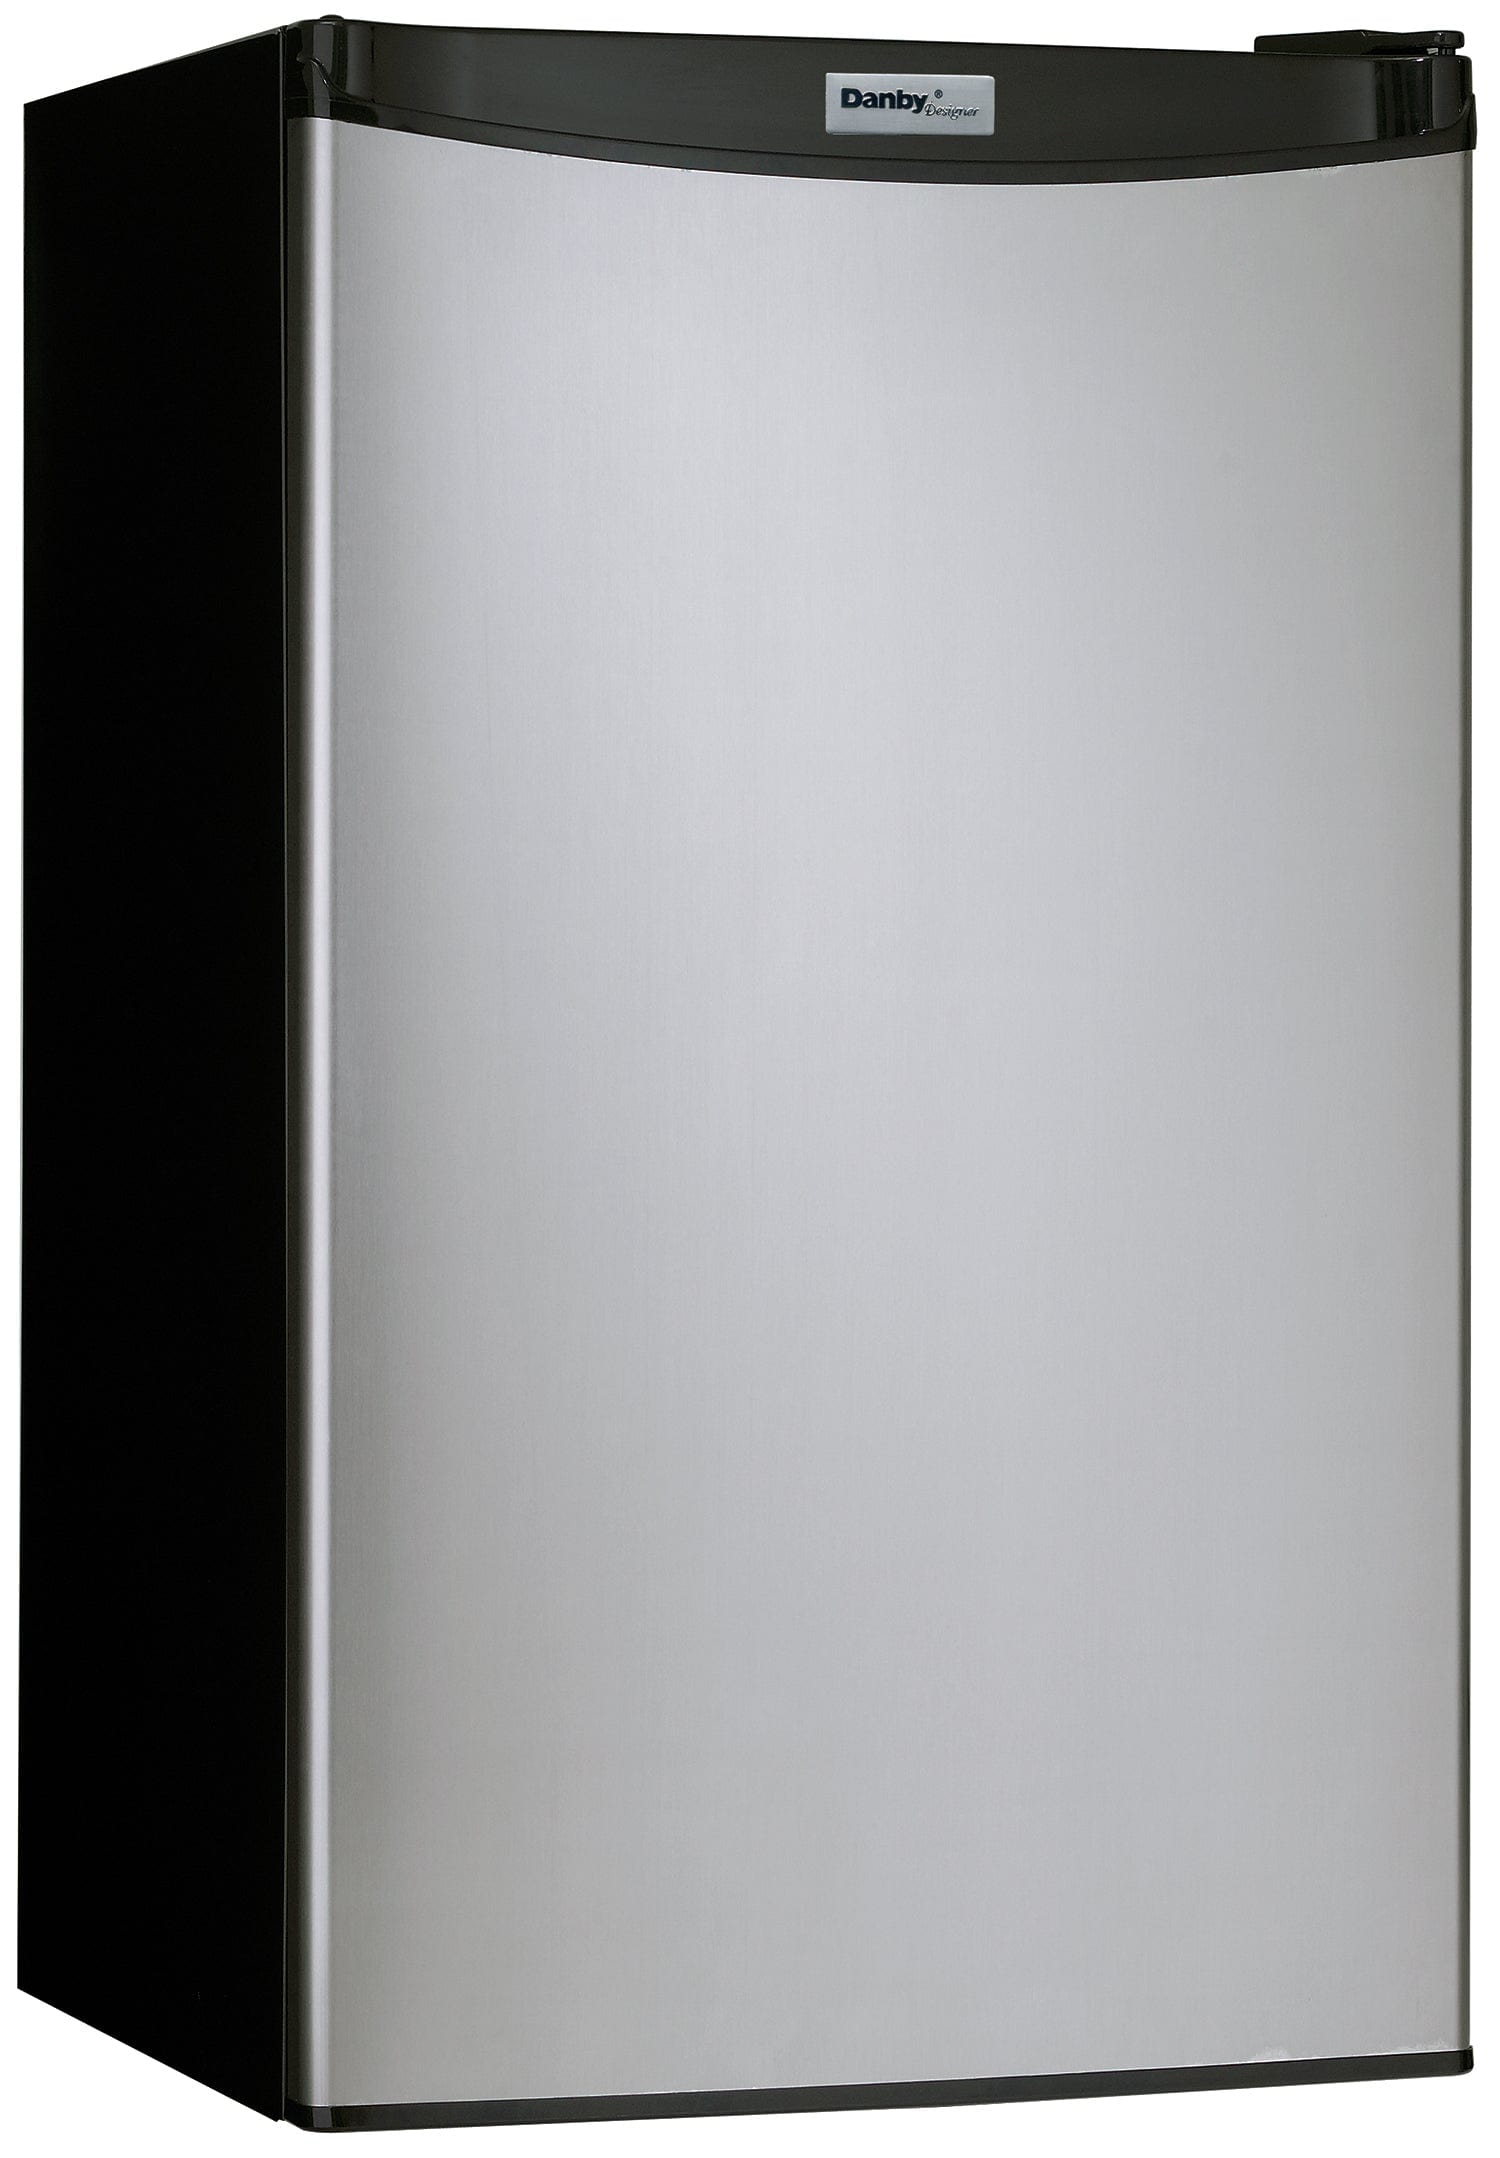 Danby 3.2 Cu Ft Refrigerator 